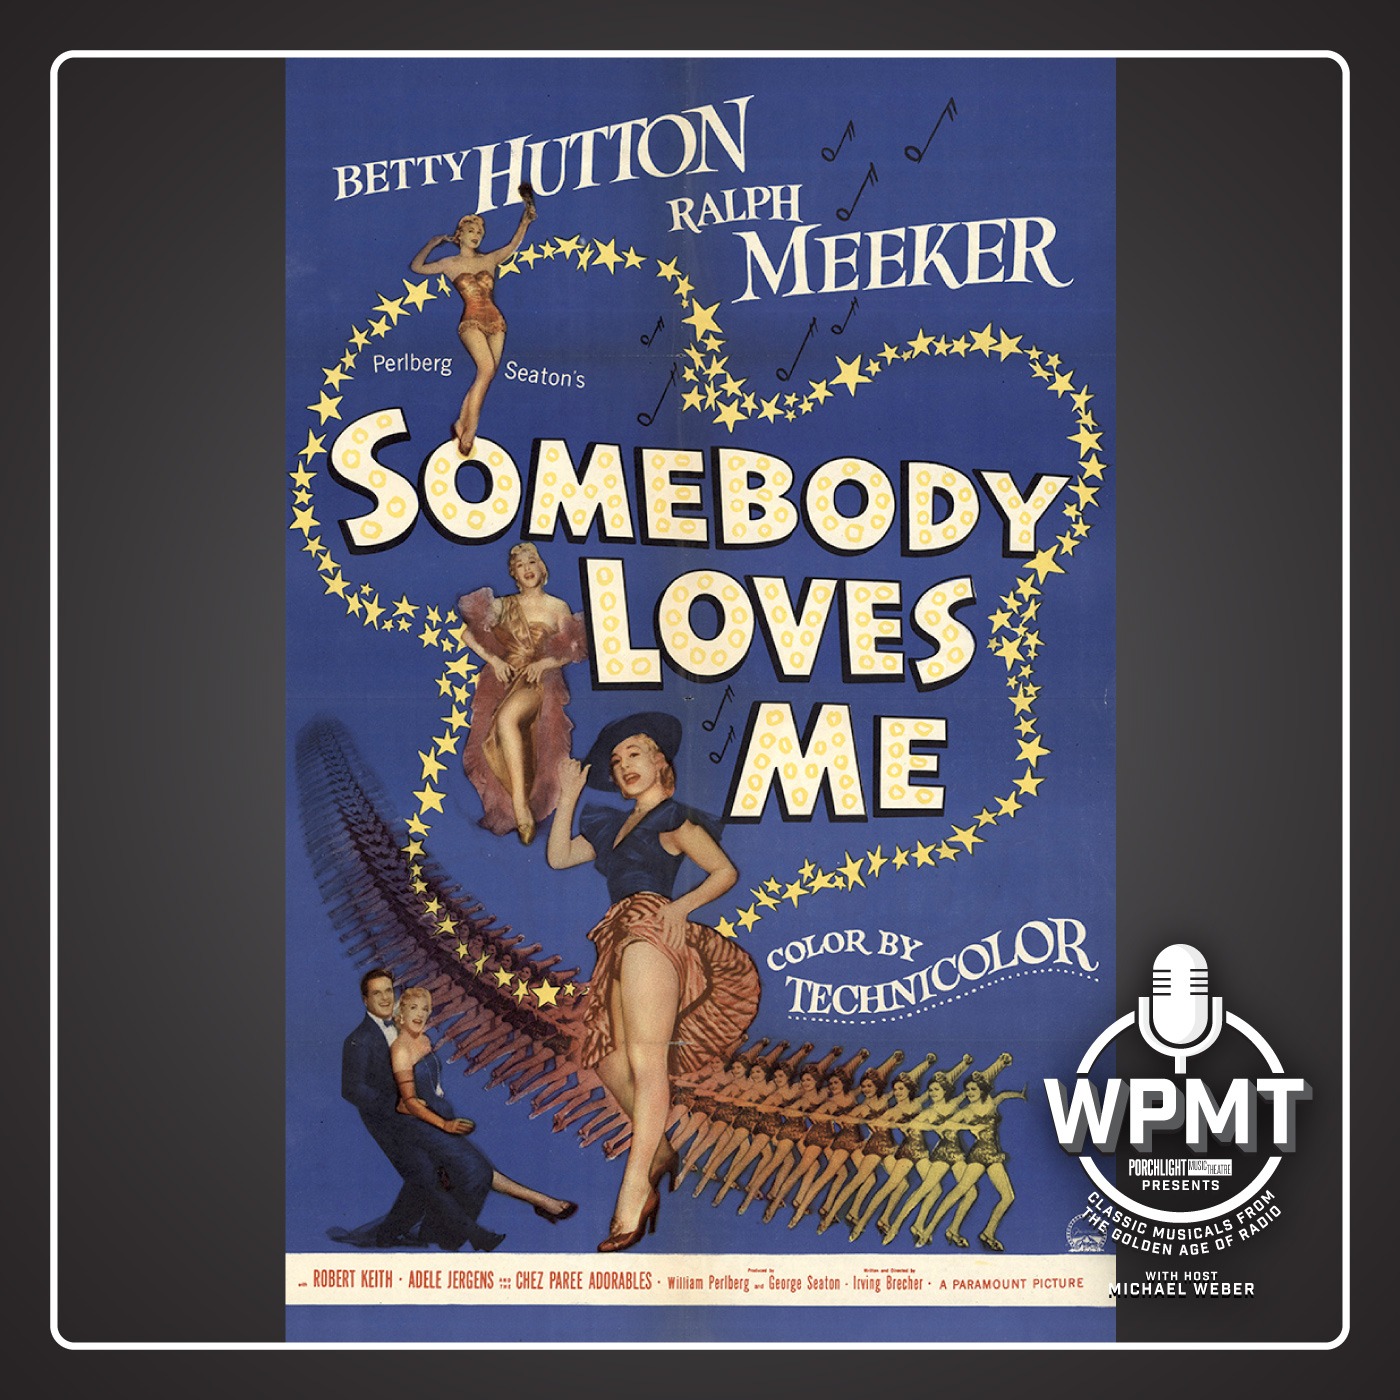 WPMT #86: Somebody Loves Me